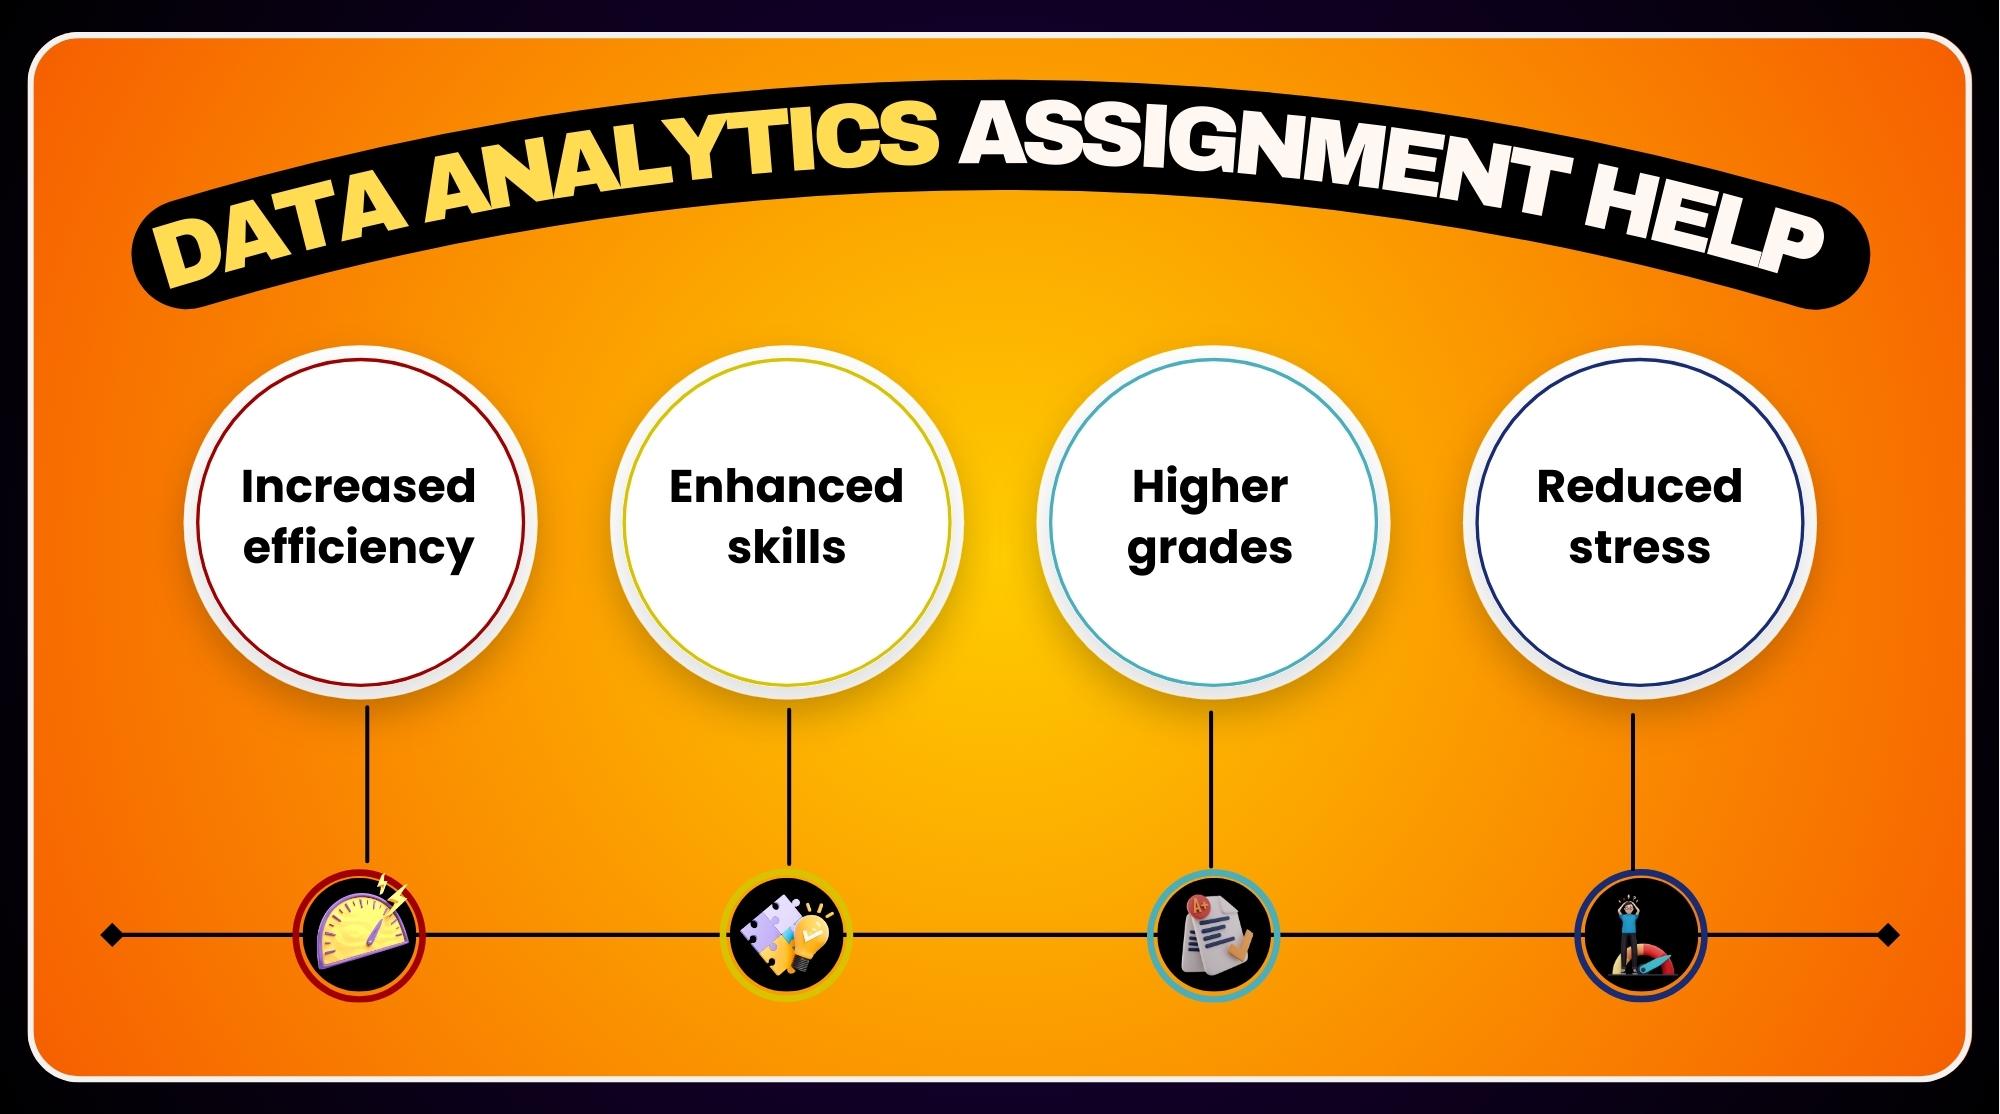 Data Analytics Assignment Help - Increase Efficiency - Enhance Skills - Higher Grades - Reduce Stress